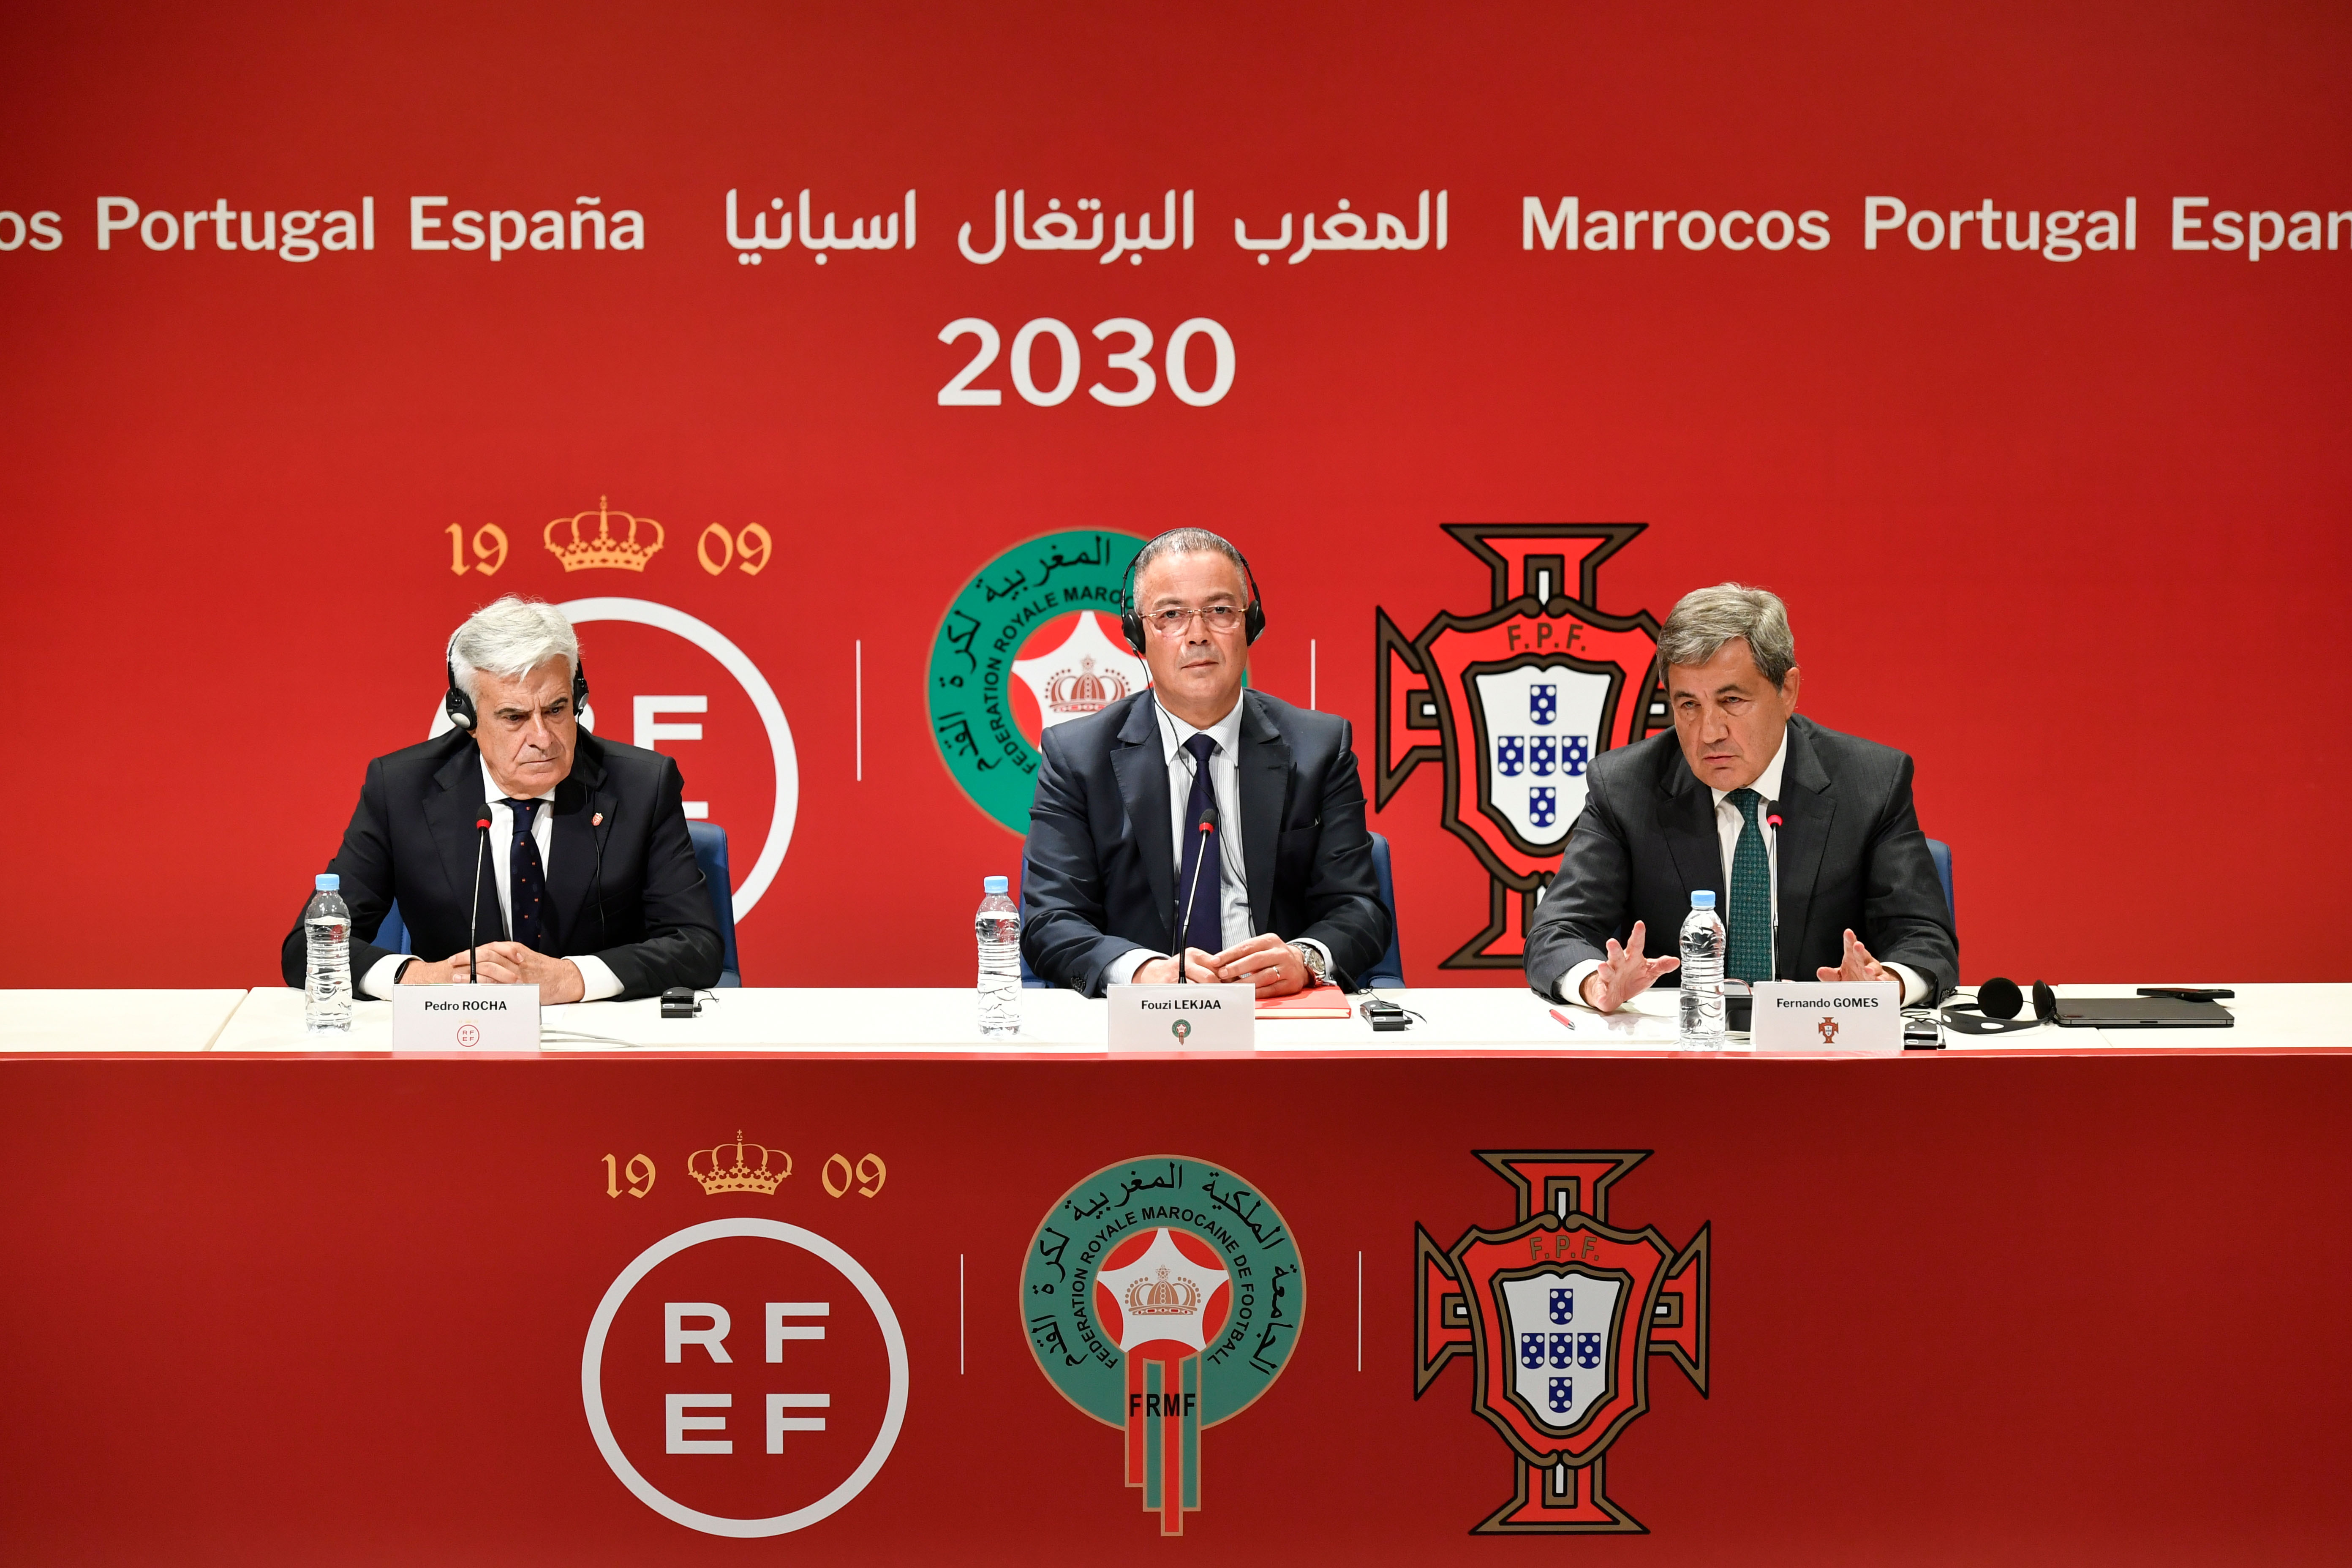 reunion-rabat-mundial-2030-presidentes-federacion-futbol-4